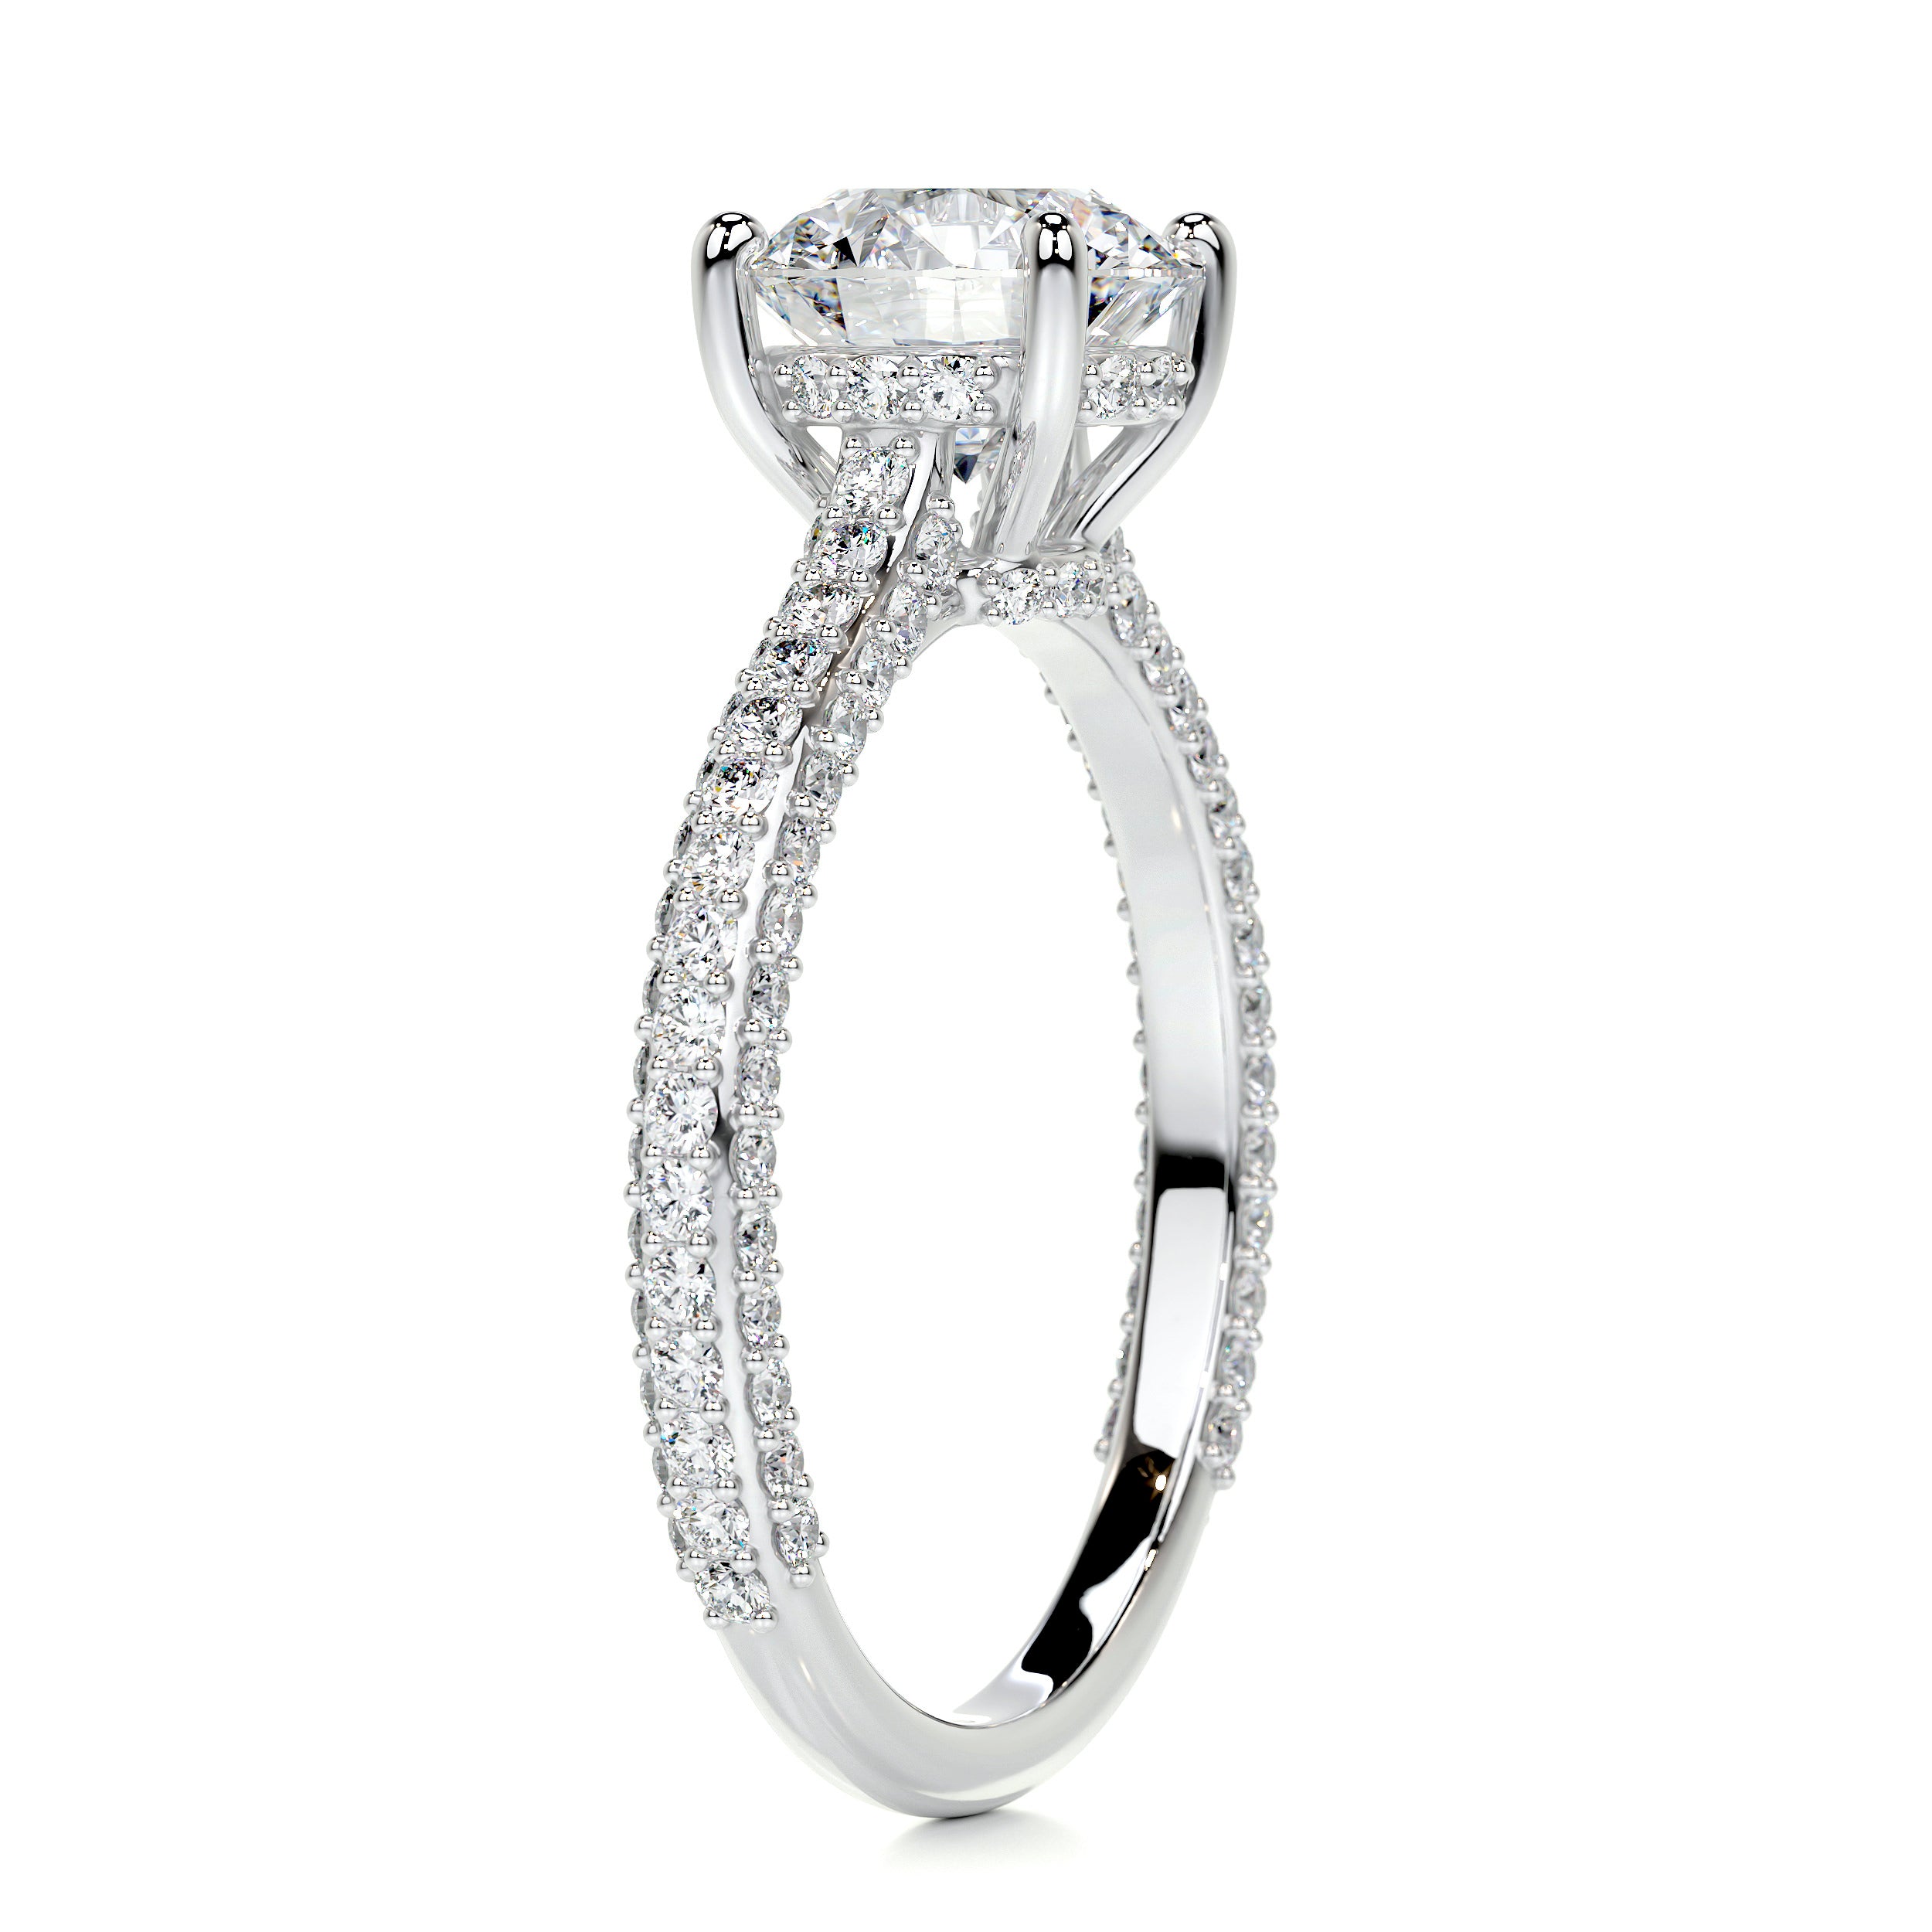 Michaela Diamond Engagement Ring   (2.25 Carat) -14K White Gold